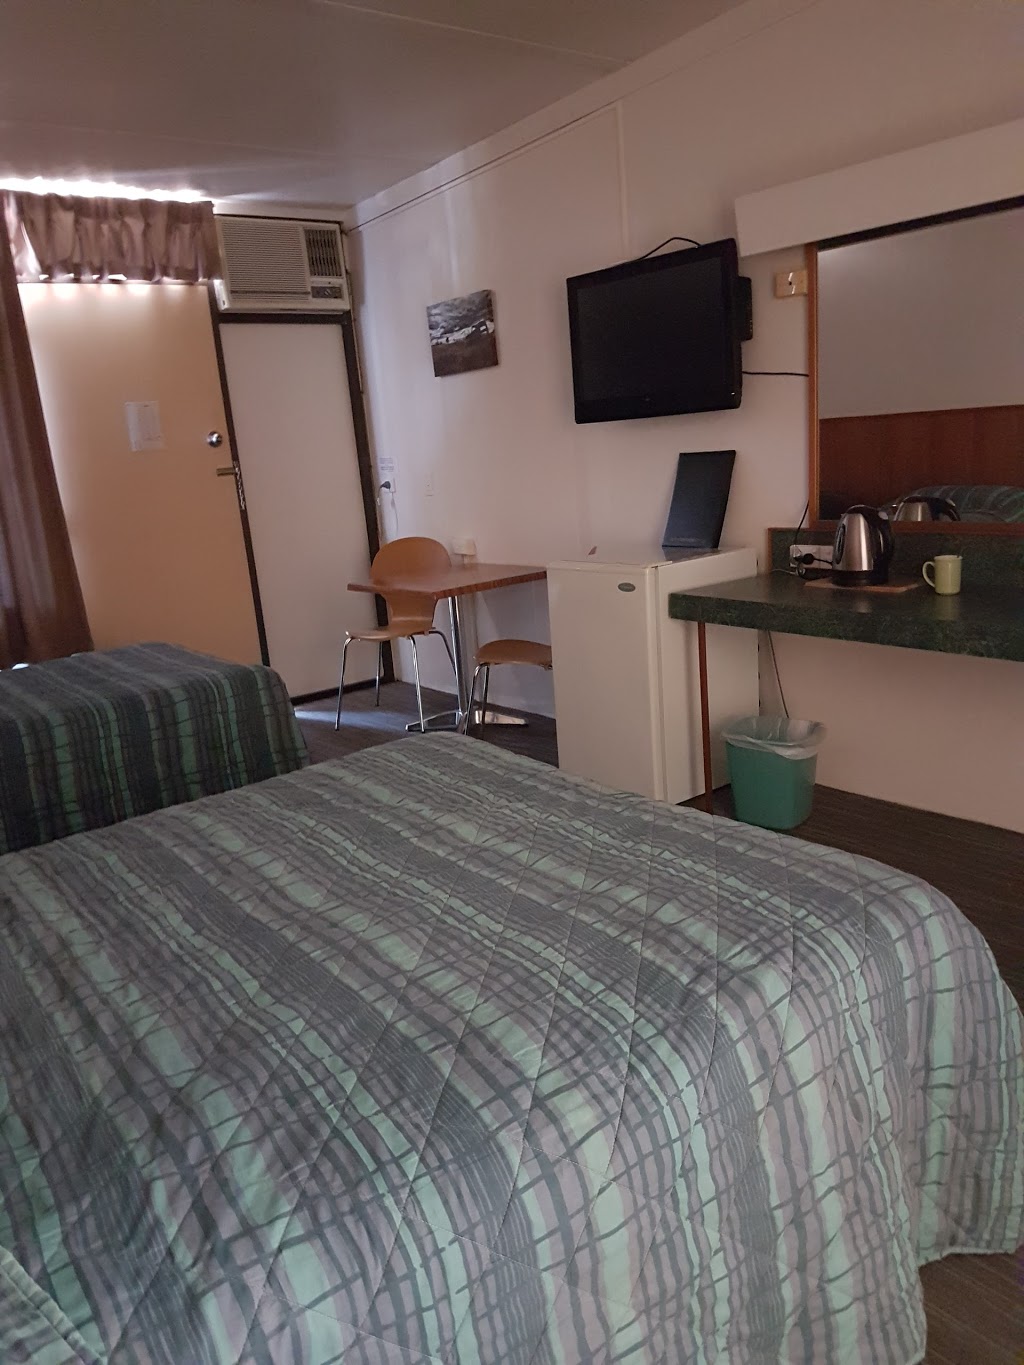 Gatton Motel | lodging | 74 Railway St, Gatton QLD 4343, Australia | 0754621333 OR +61 7 5462 1333